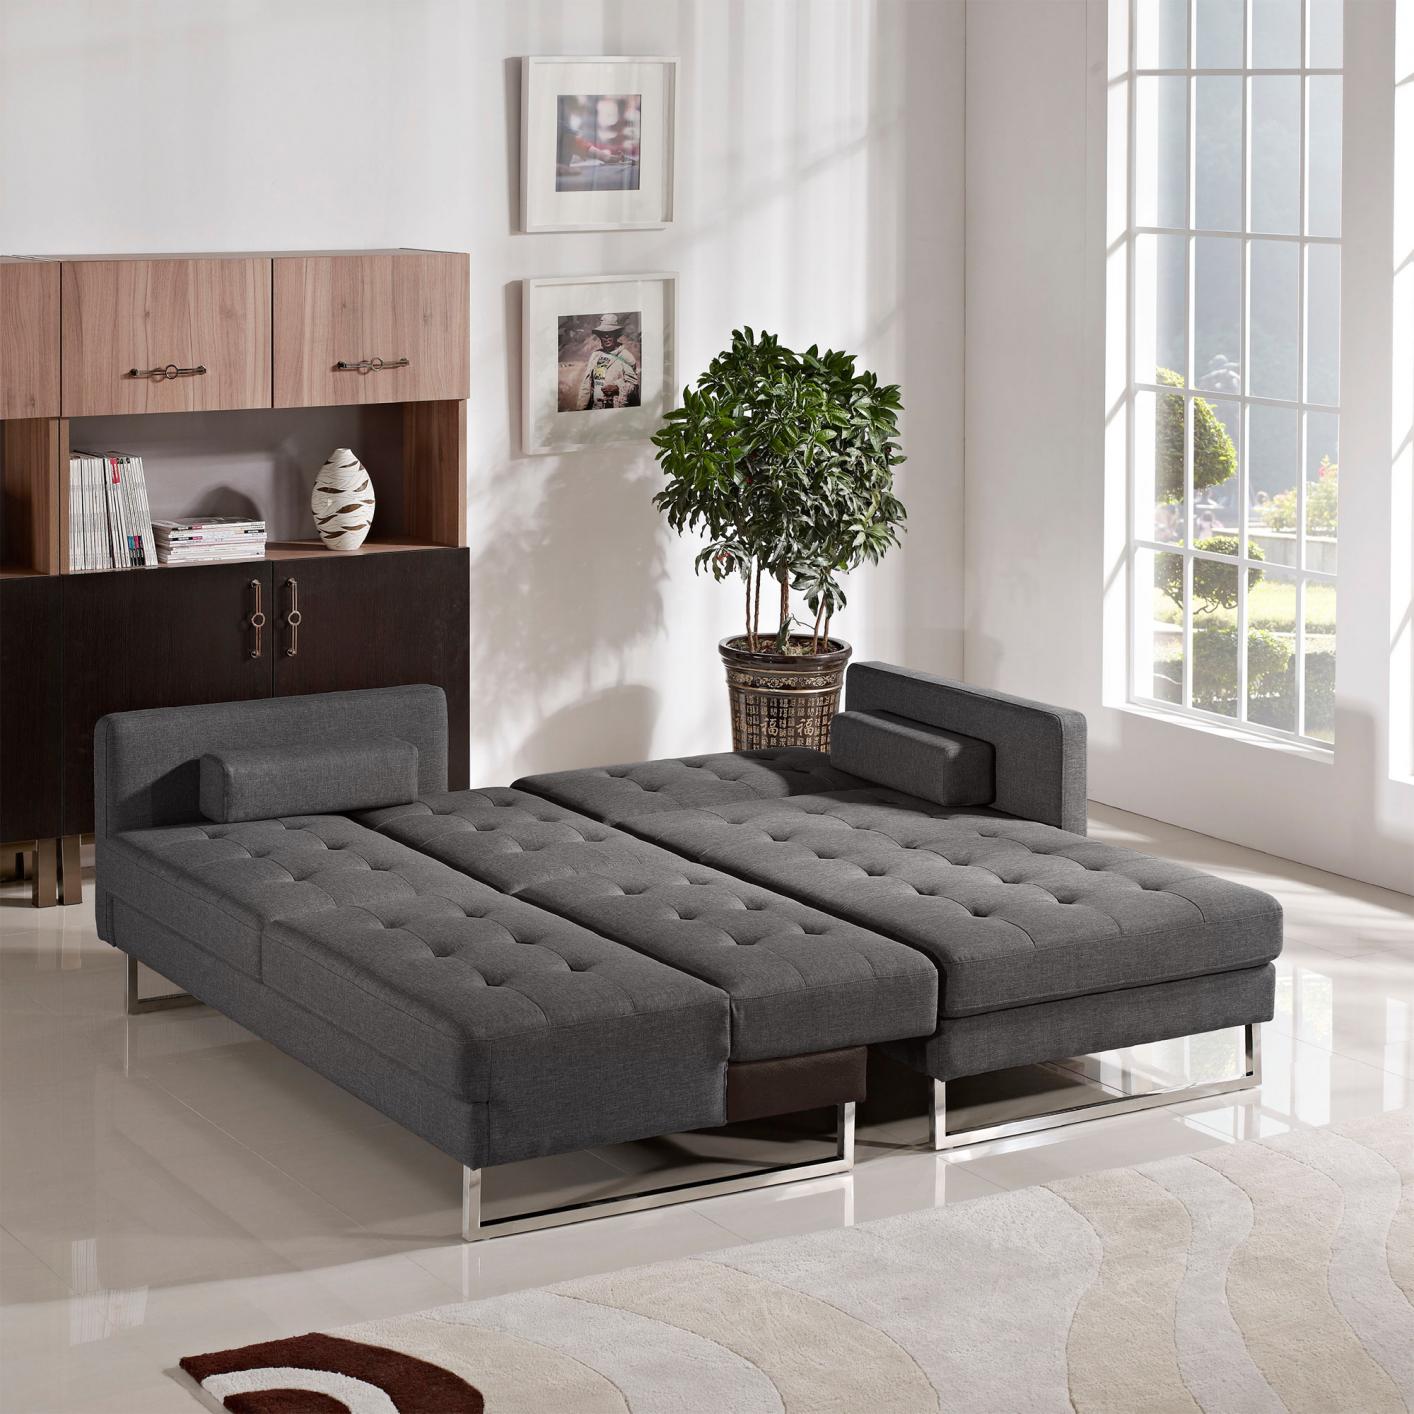 ... opus grey fabric sectional sofa bed ... HSRKFMG